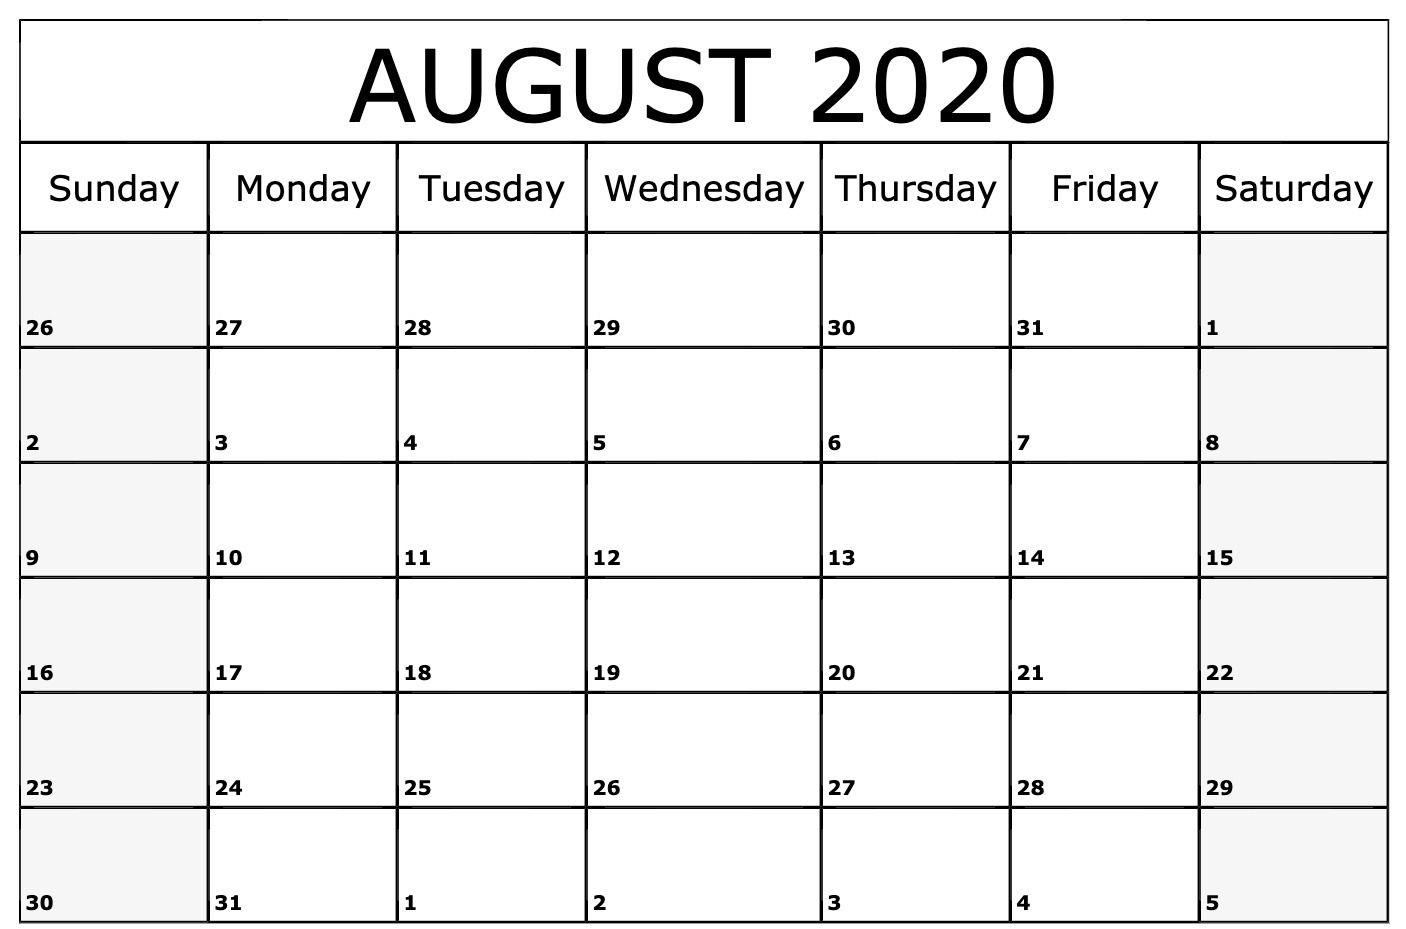 August 2020 Calendar. Monthly Calendars. Monthly